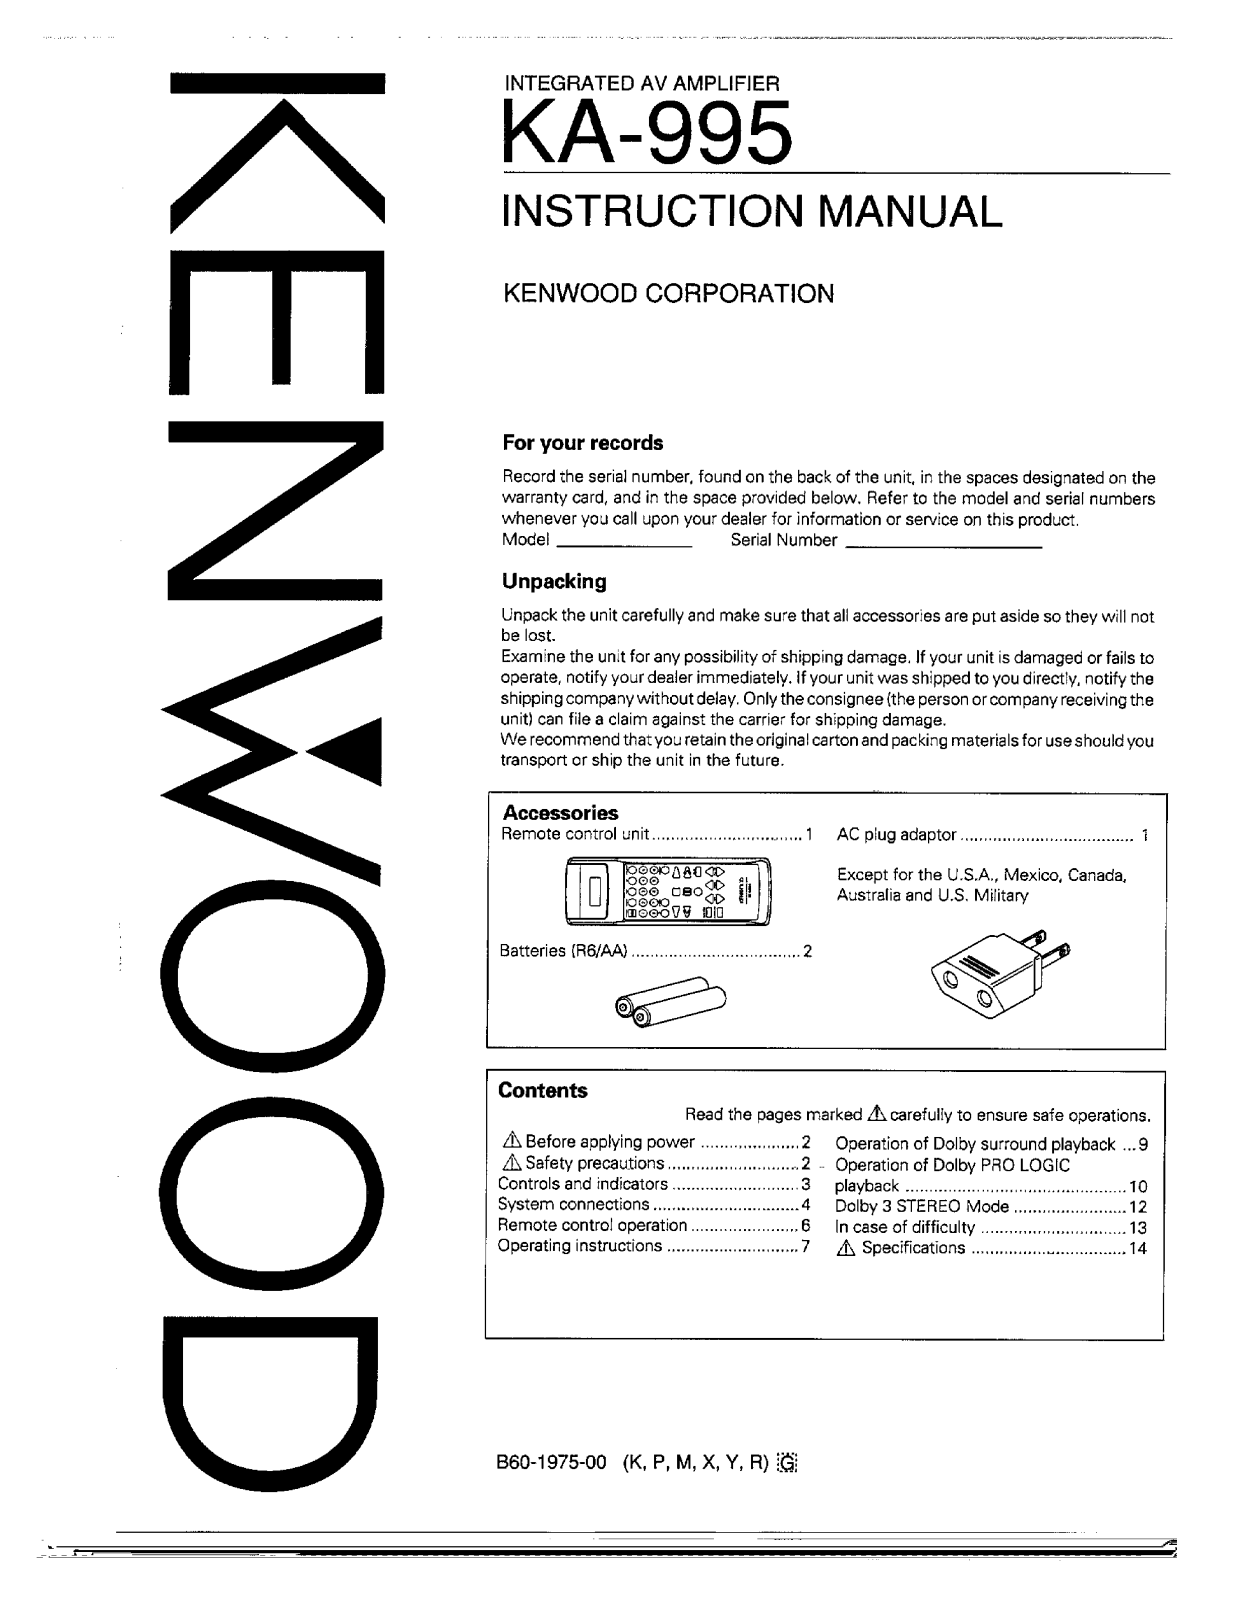 Kenwood KA-995 Owner's Manual